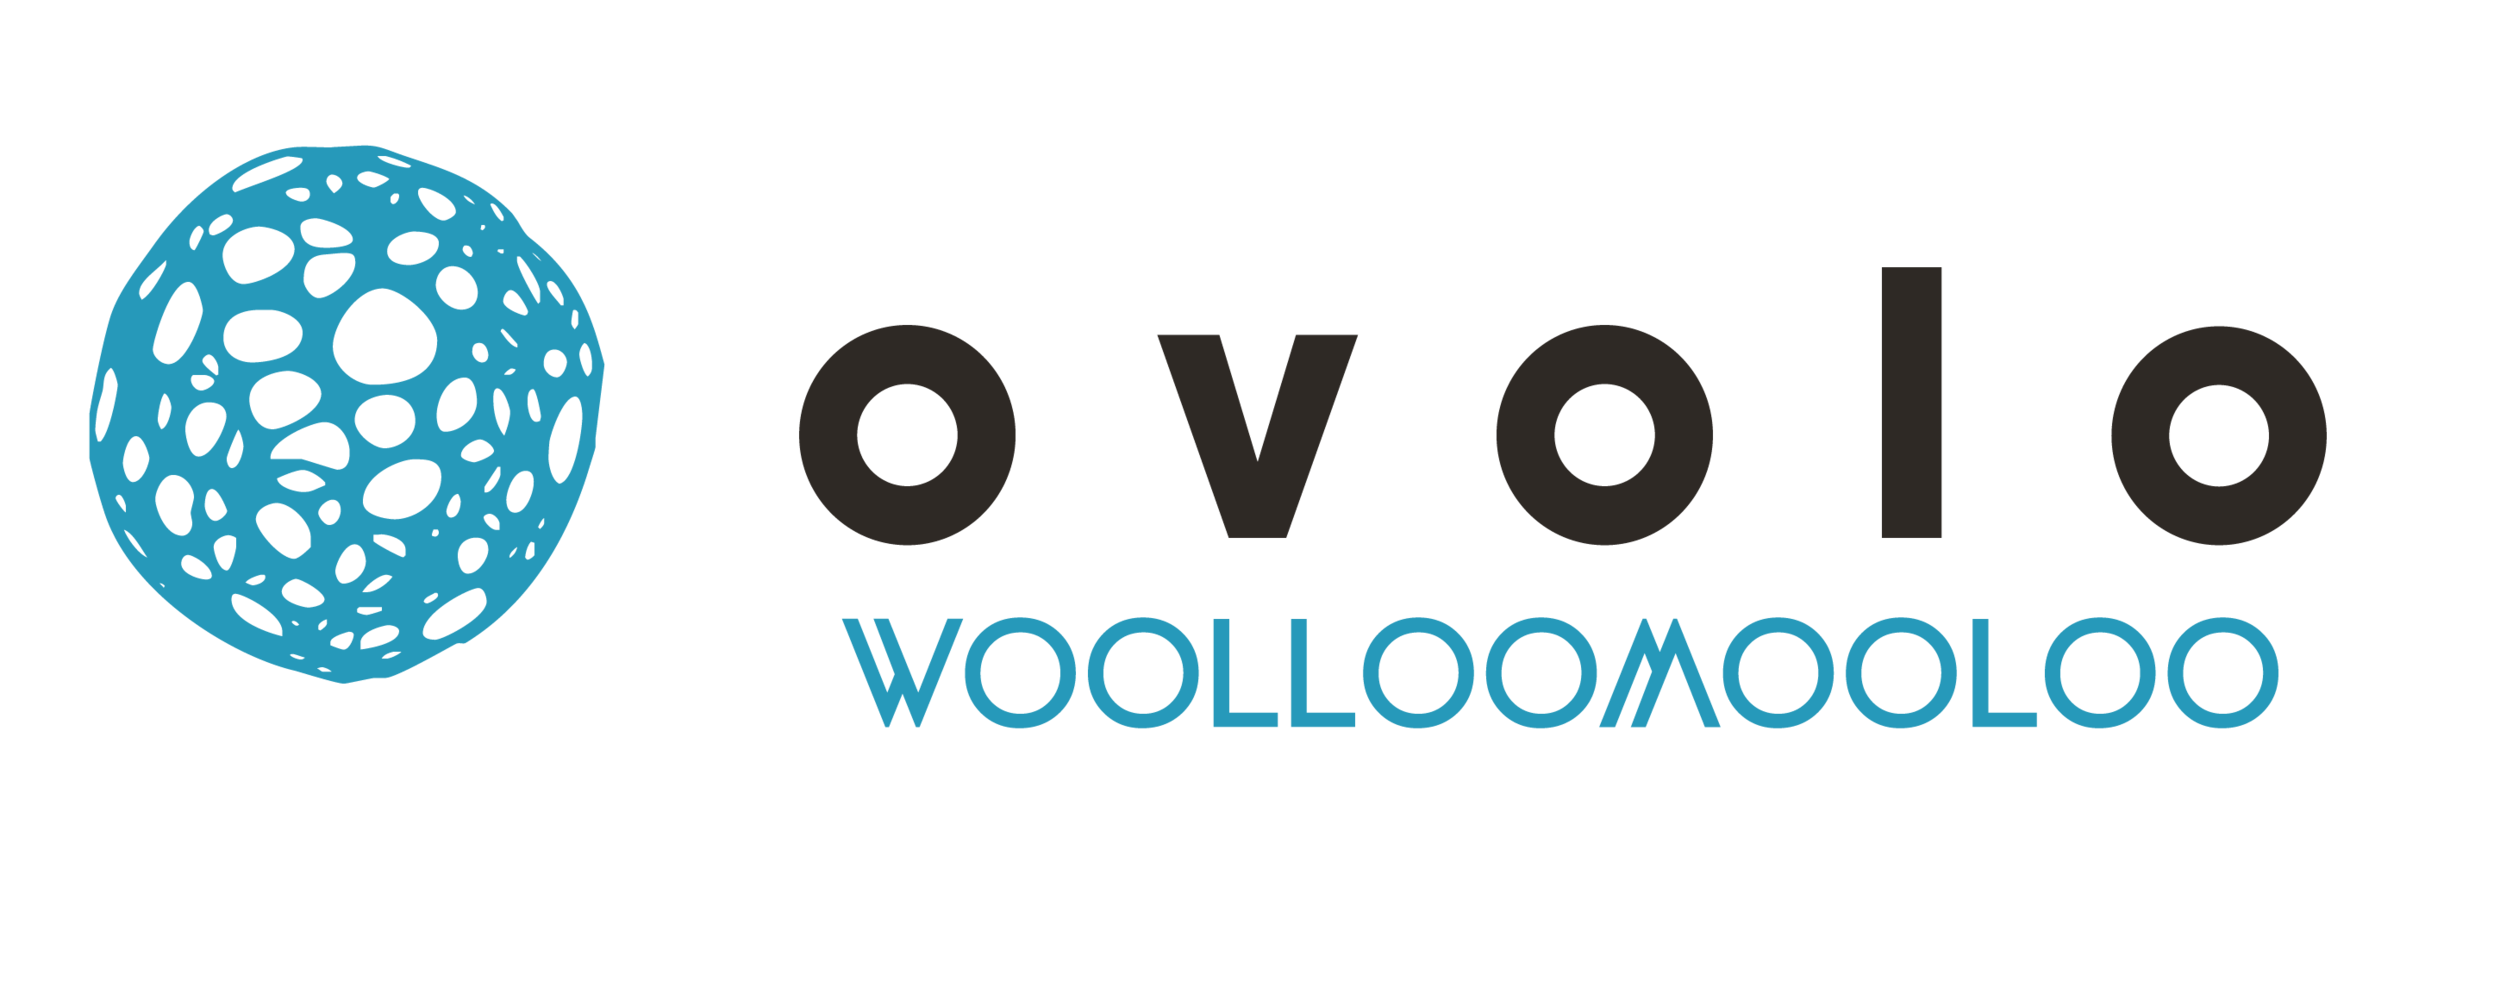 Ovolo Woolloomoolo Horizontal Logo-01.png